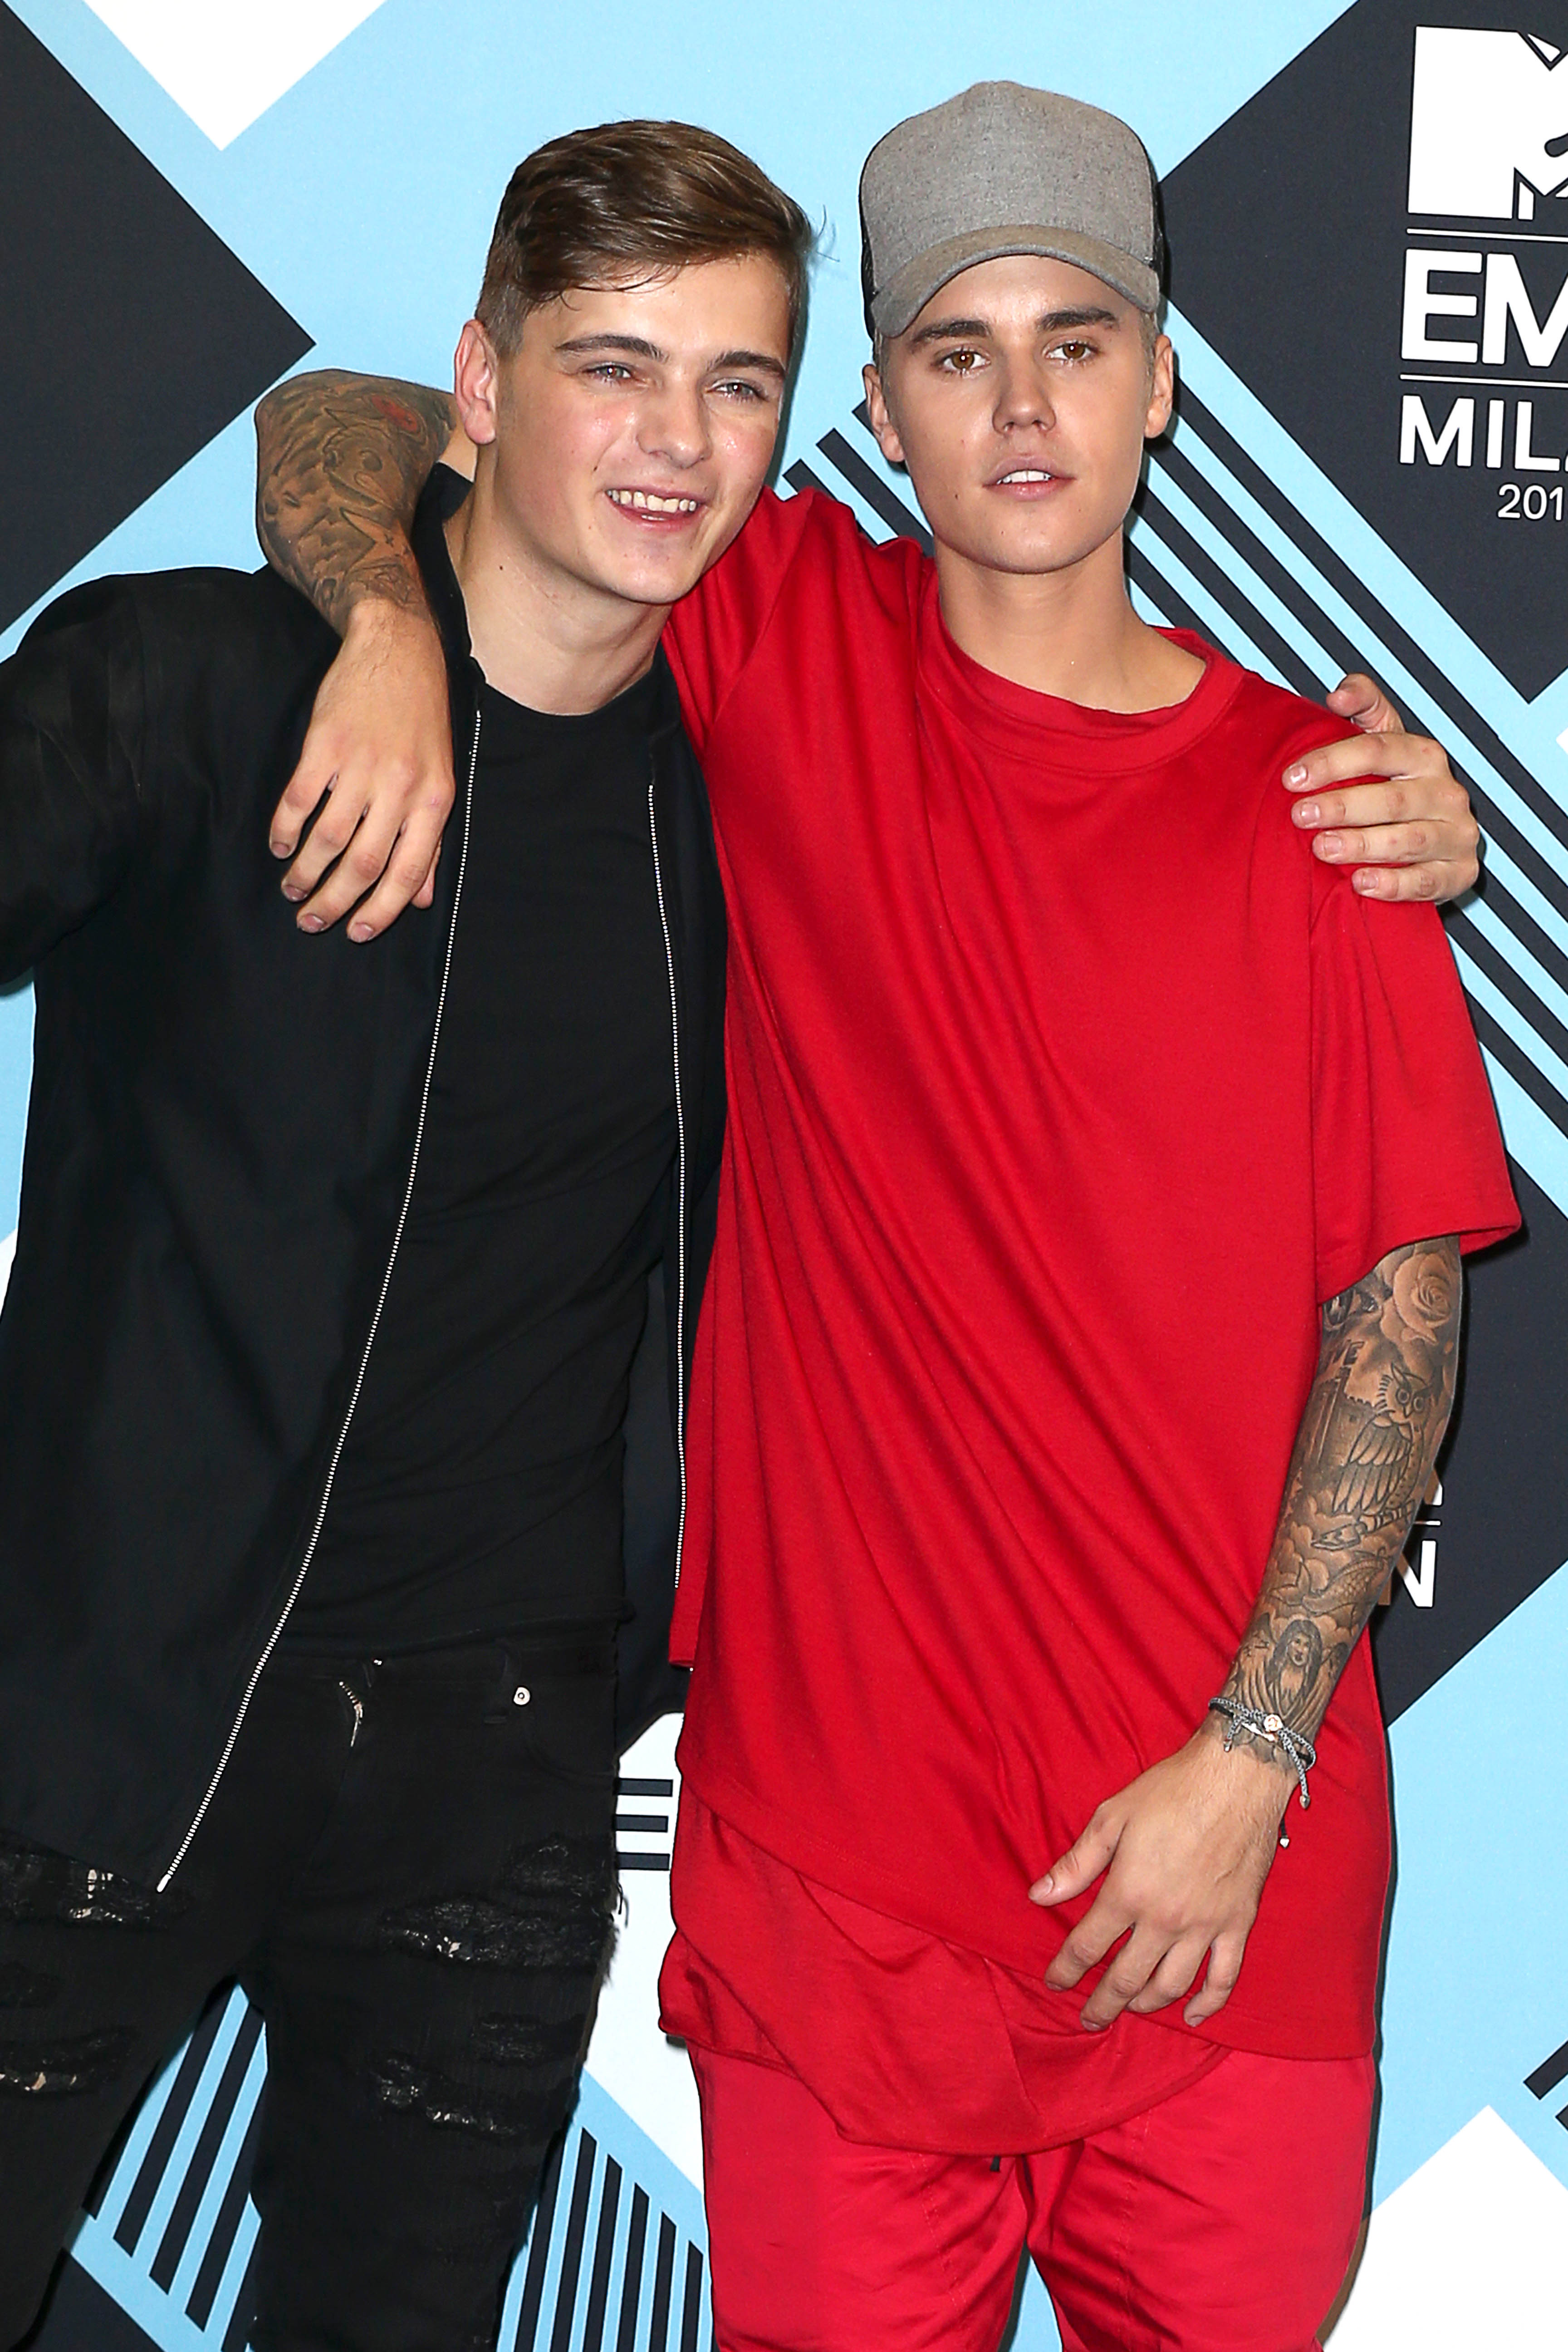 Justin Bieber attends the MTV EMAs 2015